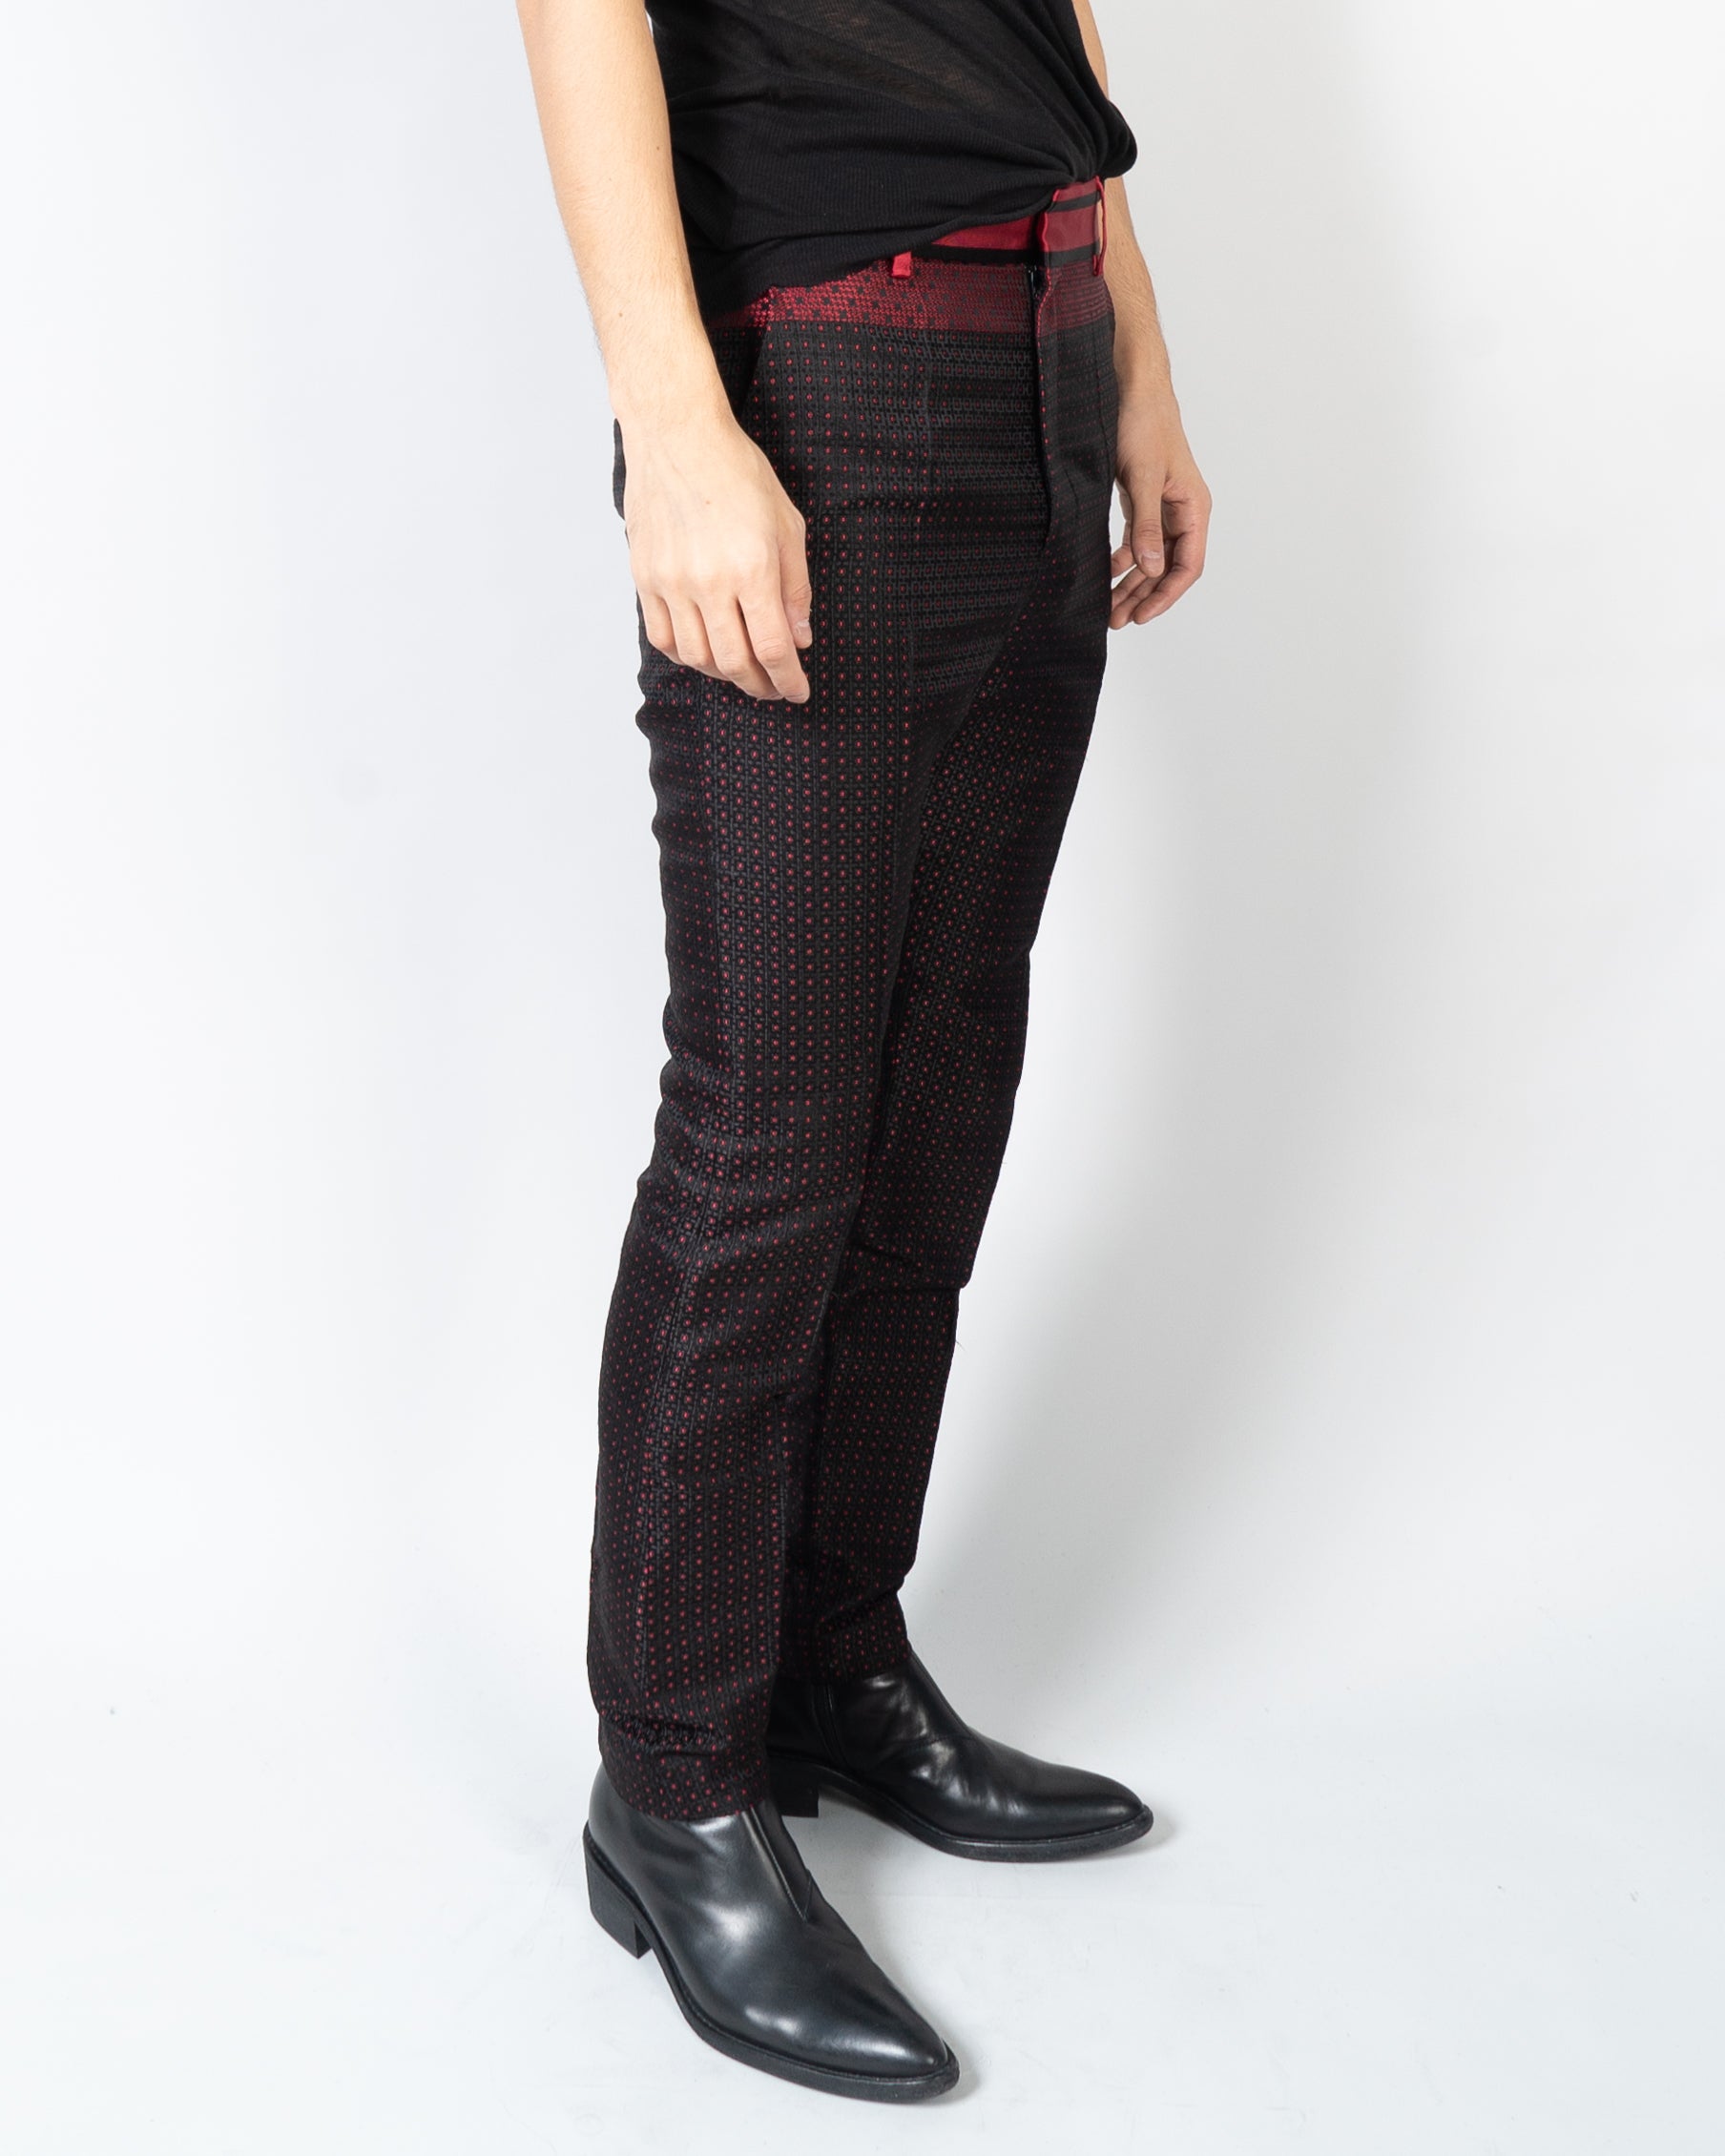 FW17 Bosco Blood Silk Jacquard Trousers 1 of 1 Sample